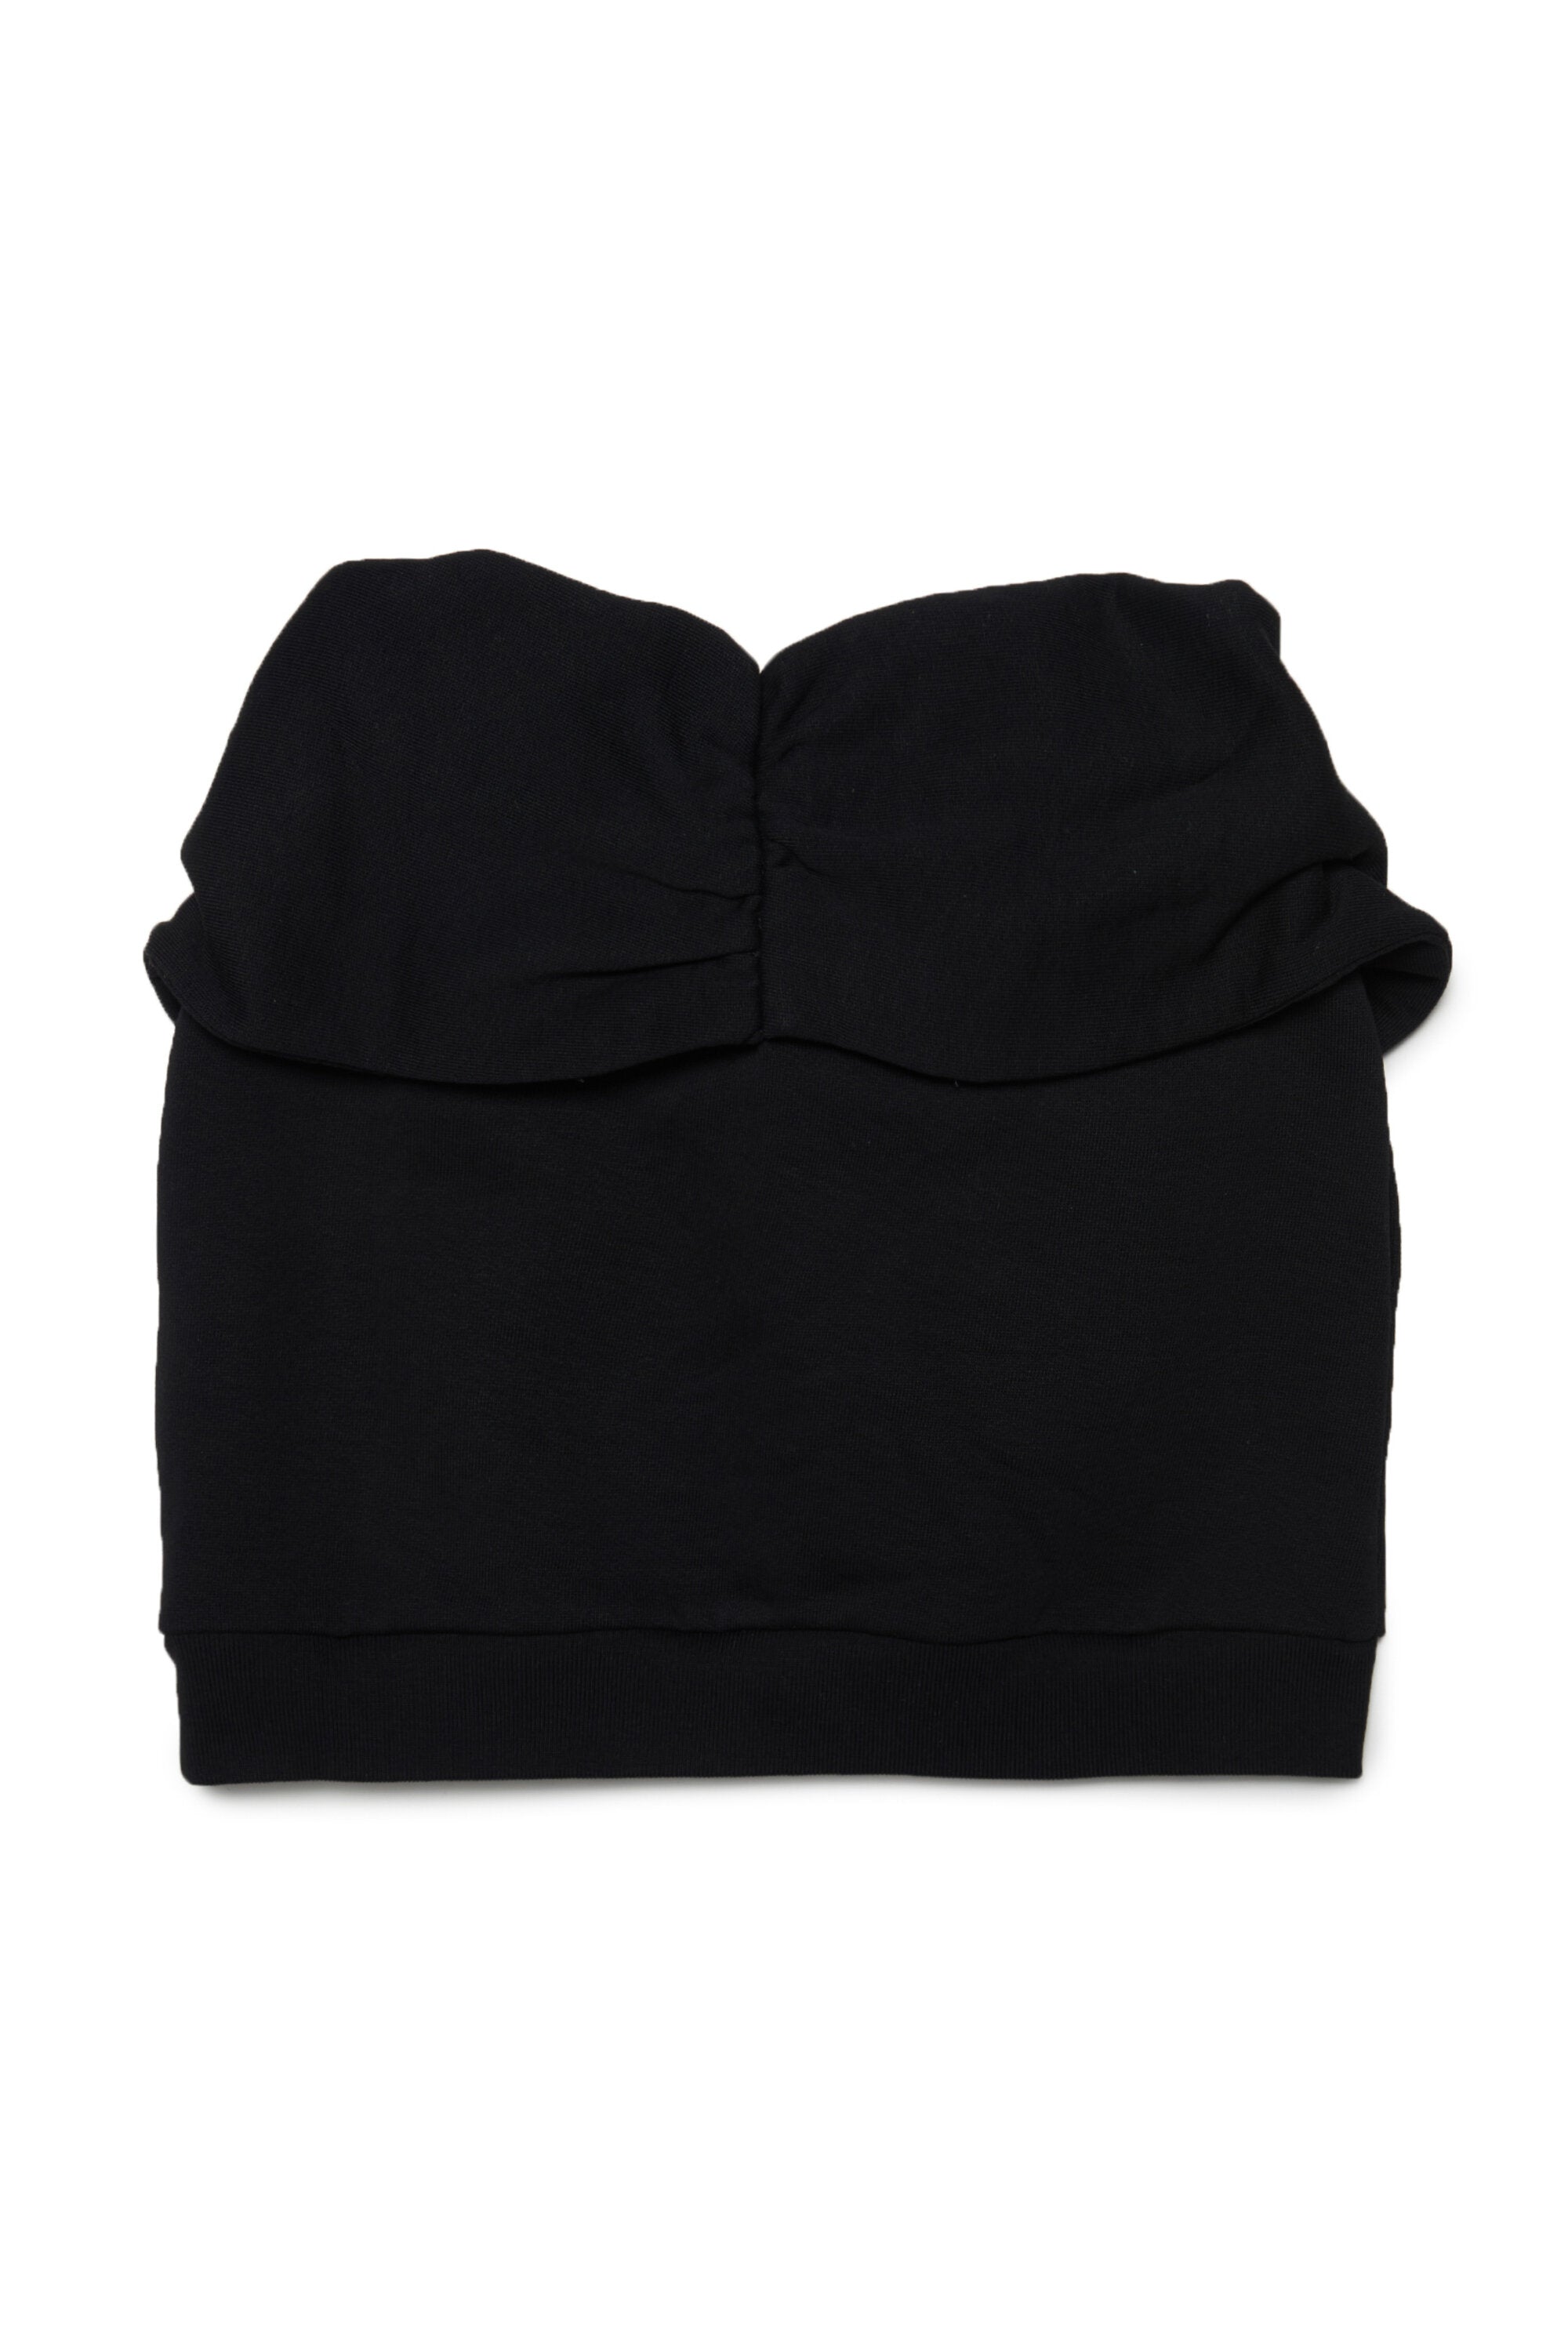 Black fleece skirt with elastic waistband and knotting